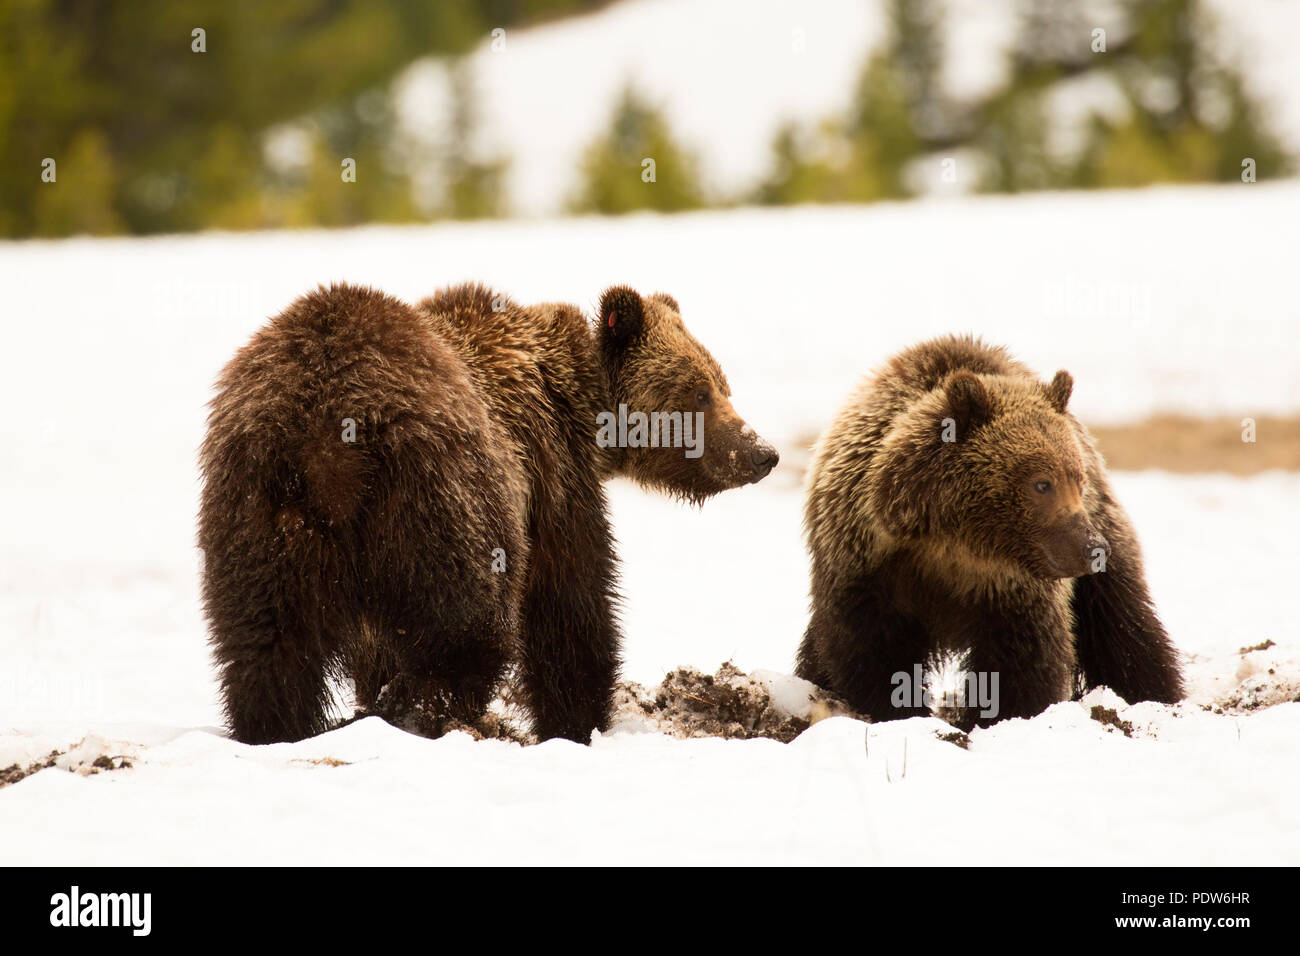 Grizzly bear, Yellowstone National Park, Wyoming Stock Photo - Alamy